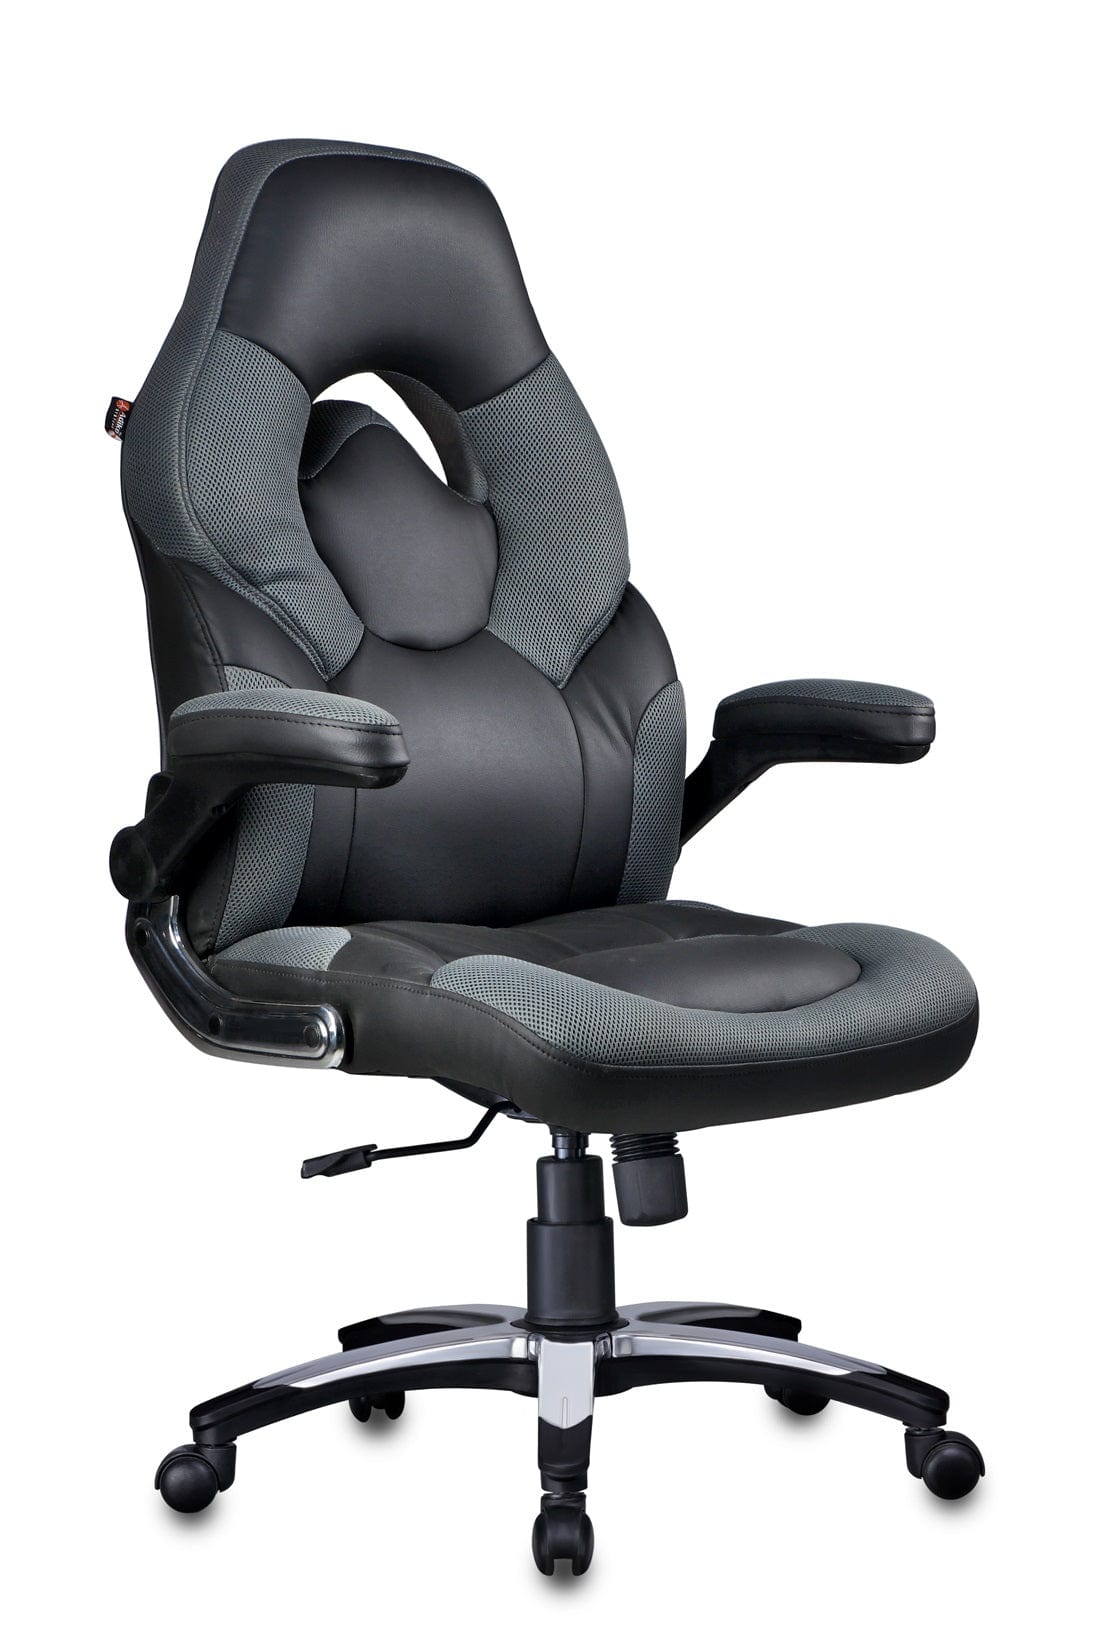 Stylish Designer chair in Black / Grey